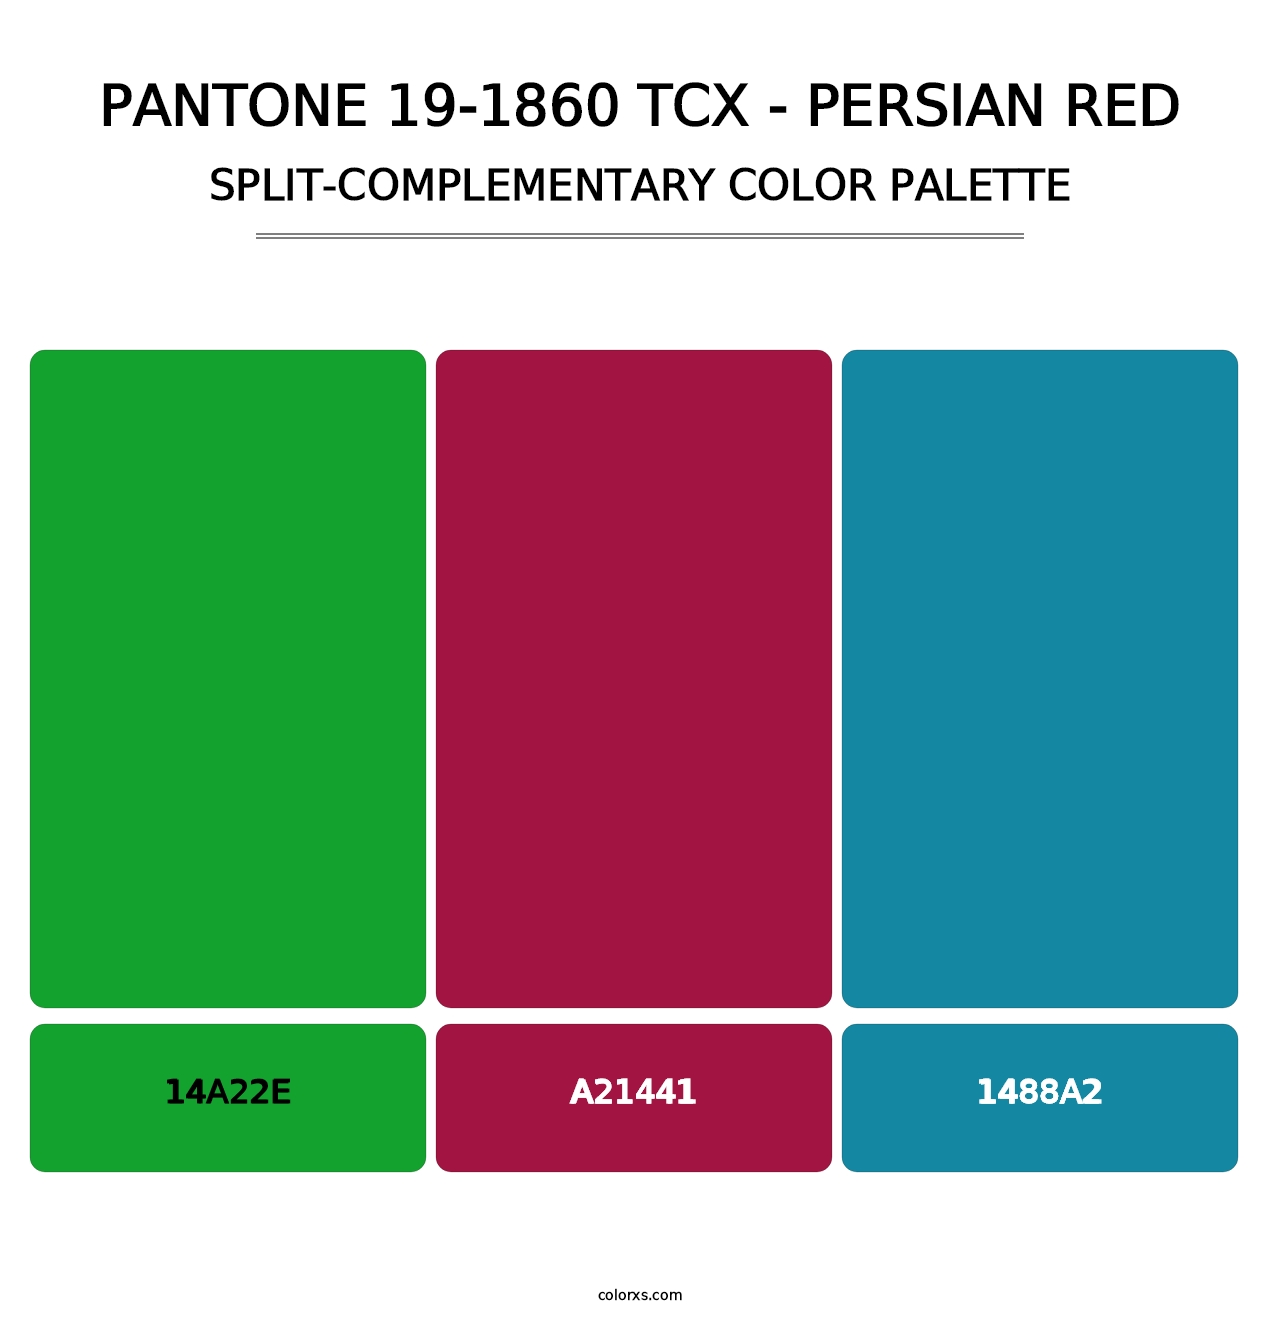 PANTONE 19-1860 TCX - Persian Red - Split-Complementary Color Palette